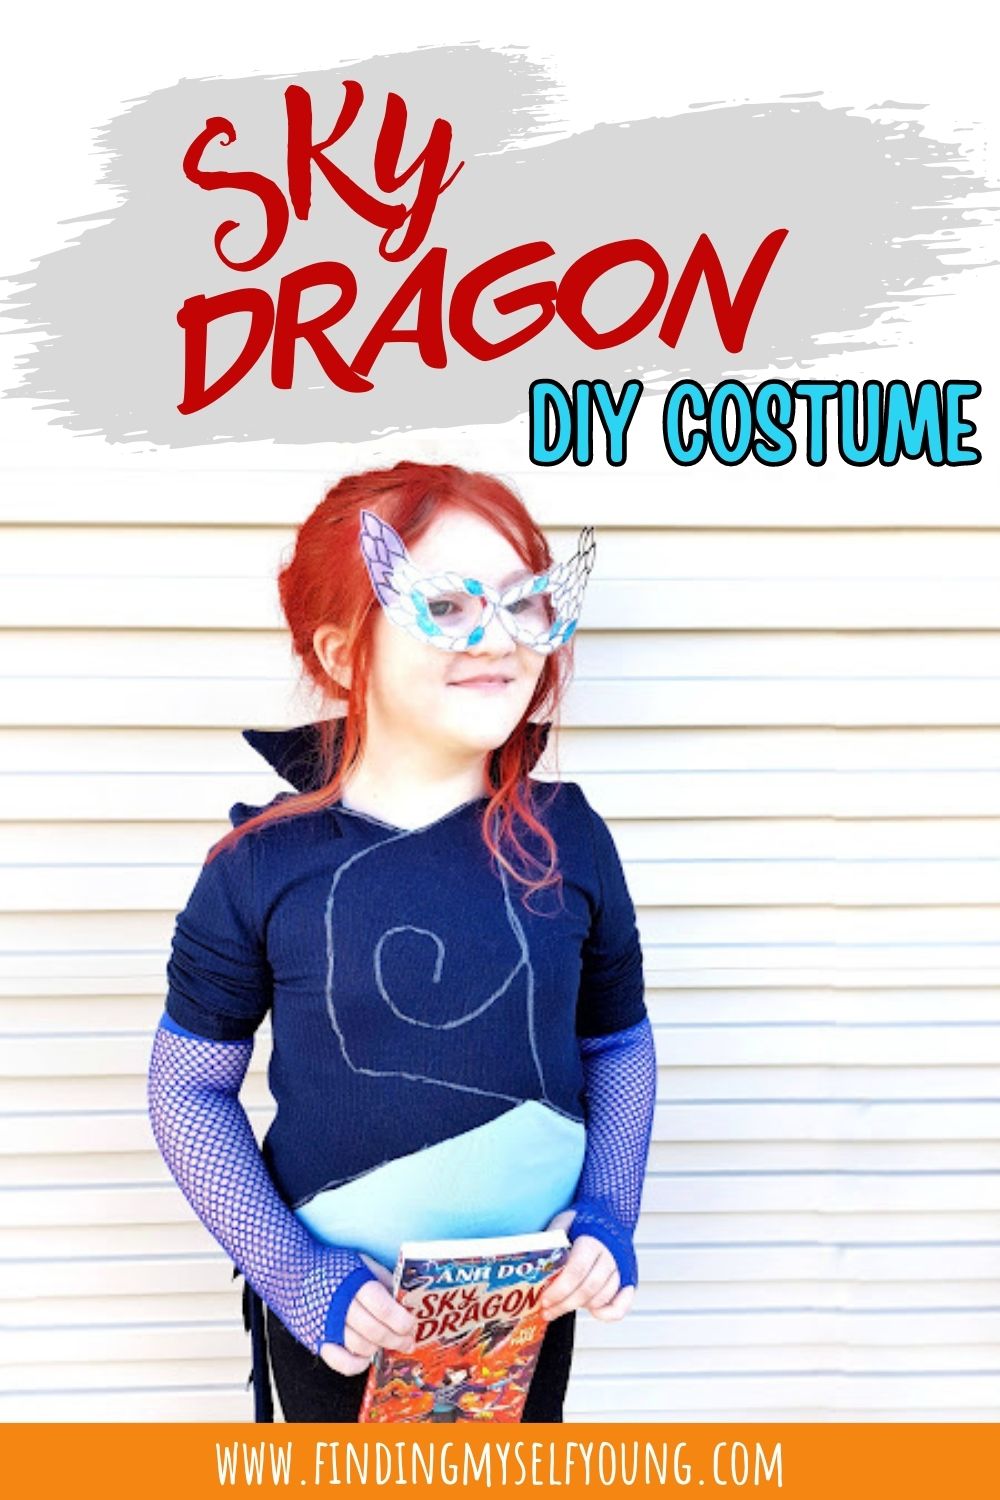 Sky Dragon DIY costume instructions